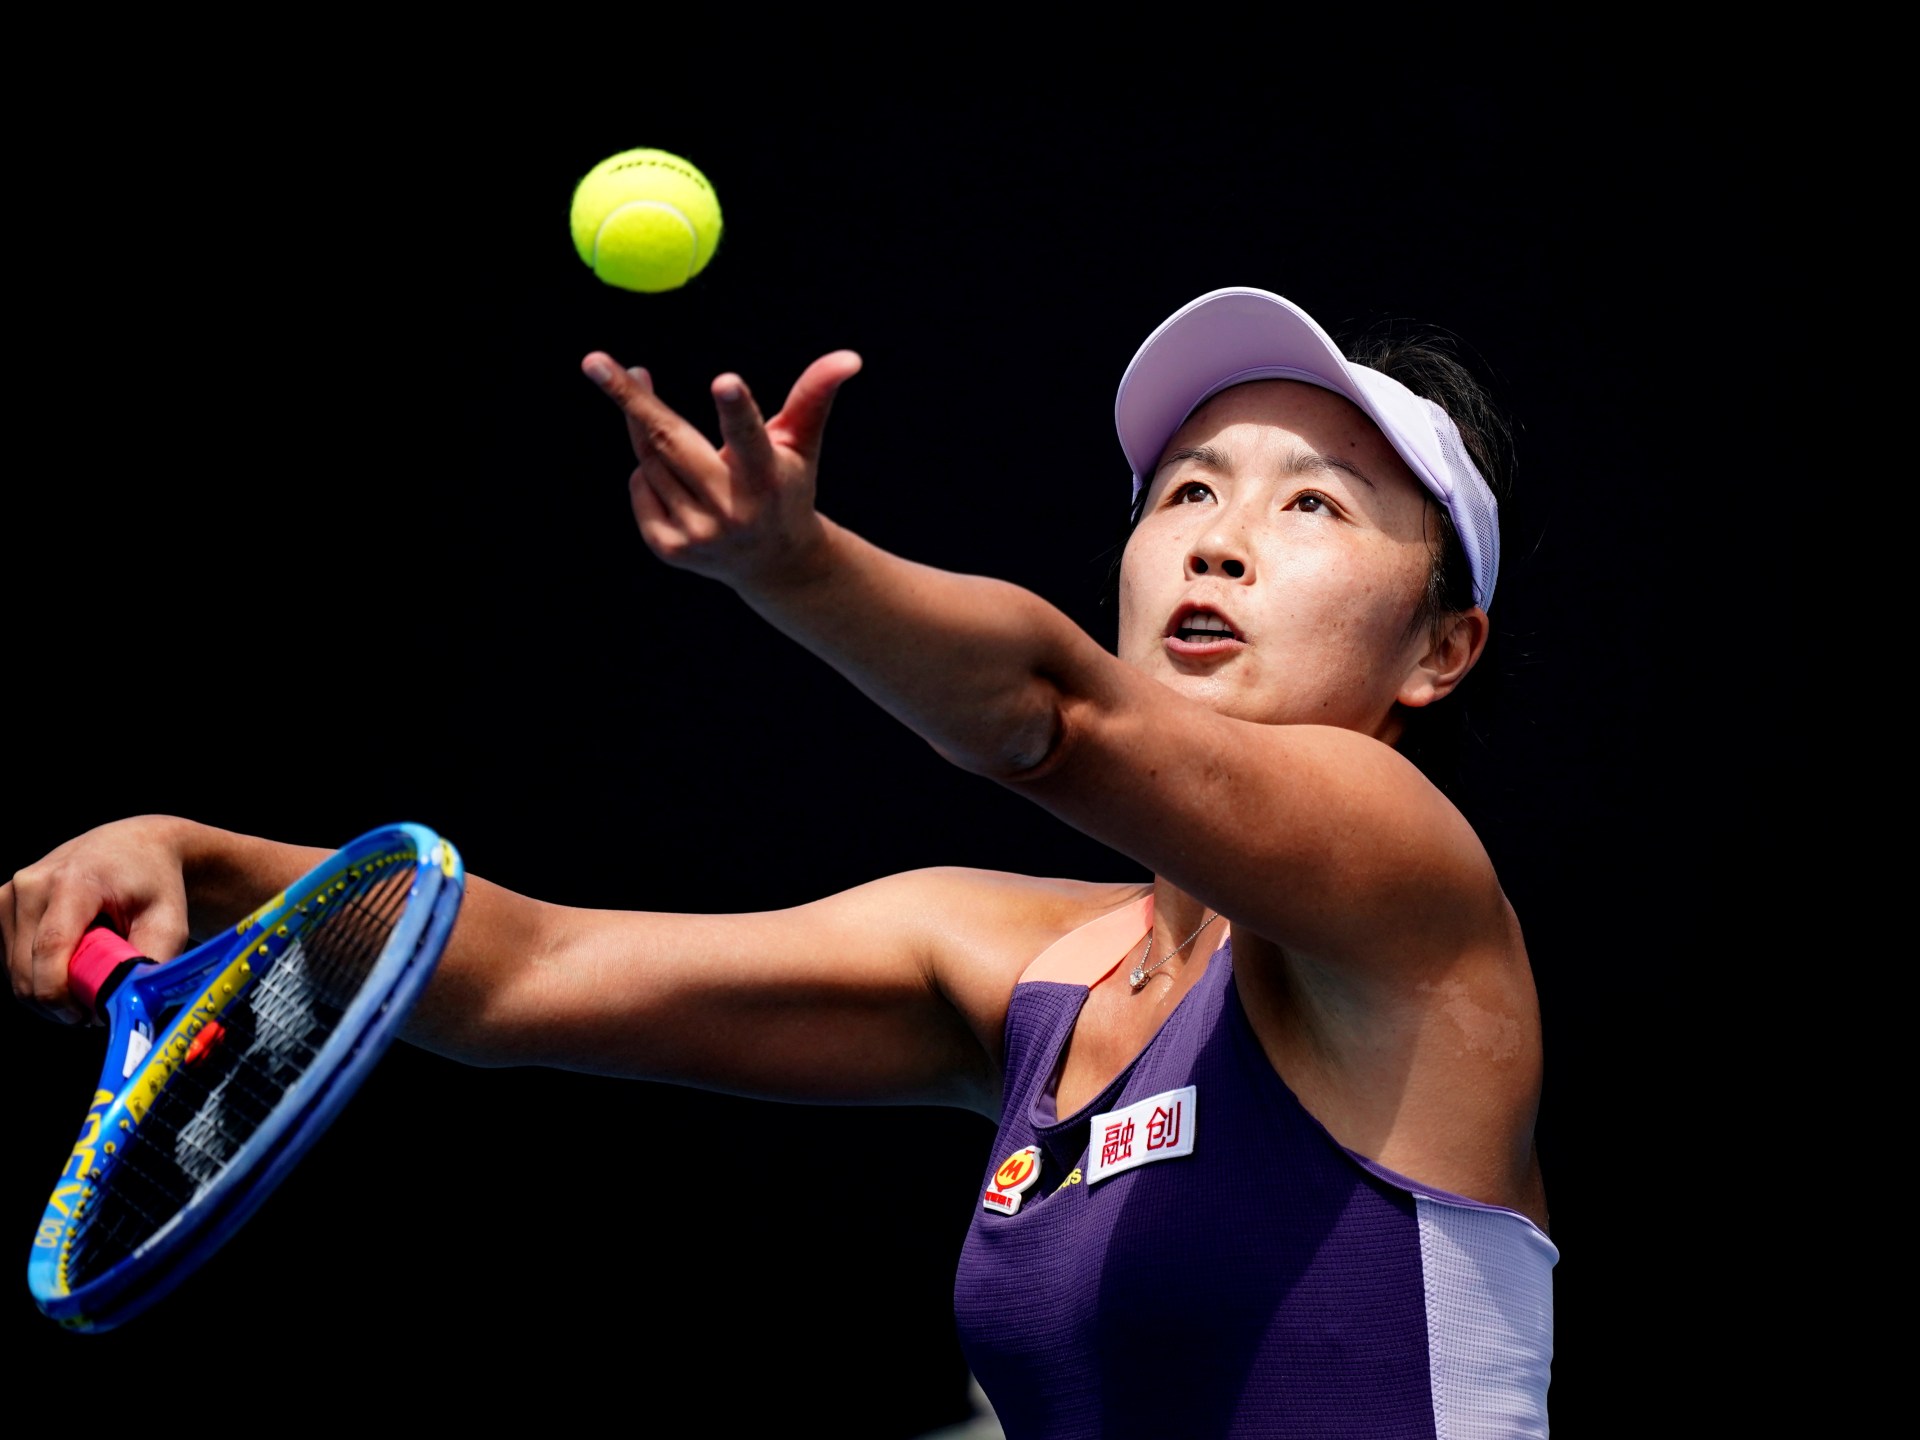 Acara tenis wanita membuat China kembali setelah boikot Peng |  Berita Hak Asasi Manusia